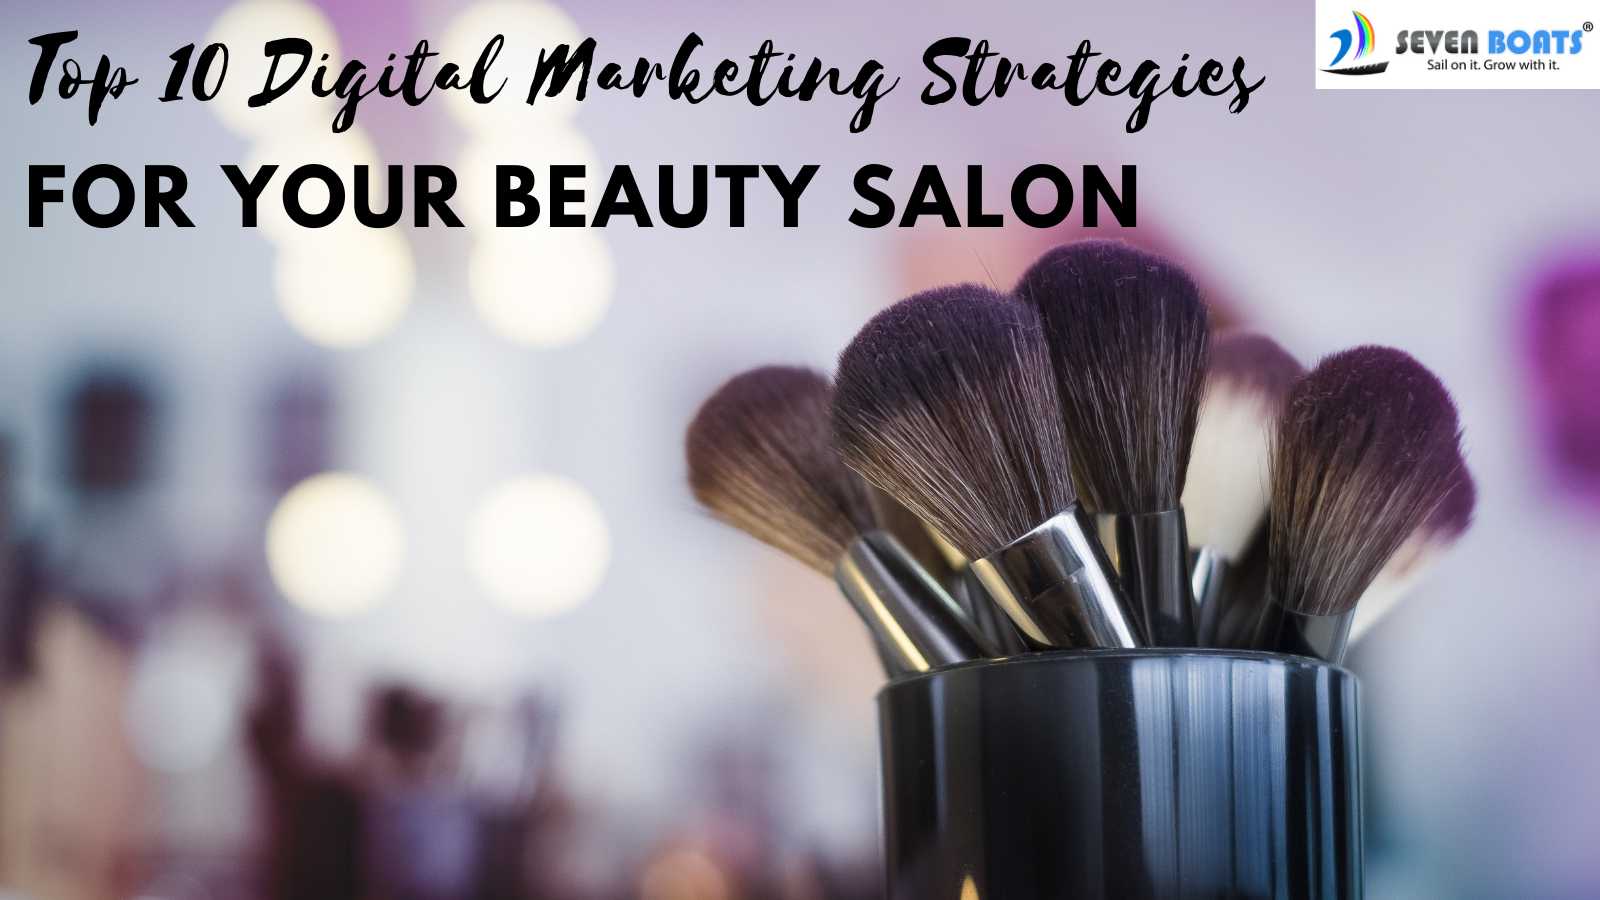 Top 10 Digital Marketing Strategies for Your Beauty Salon